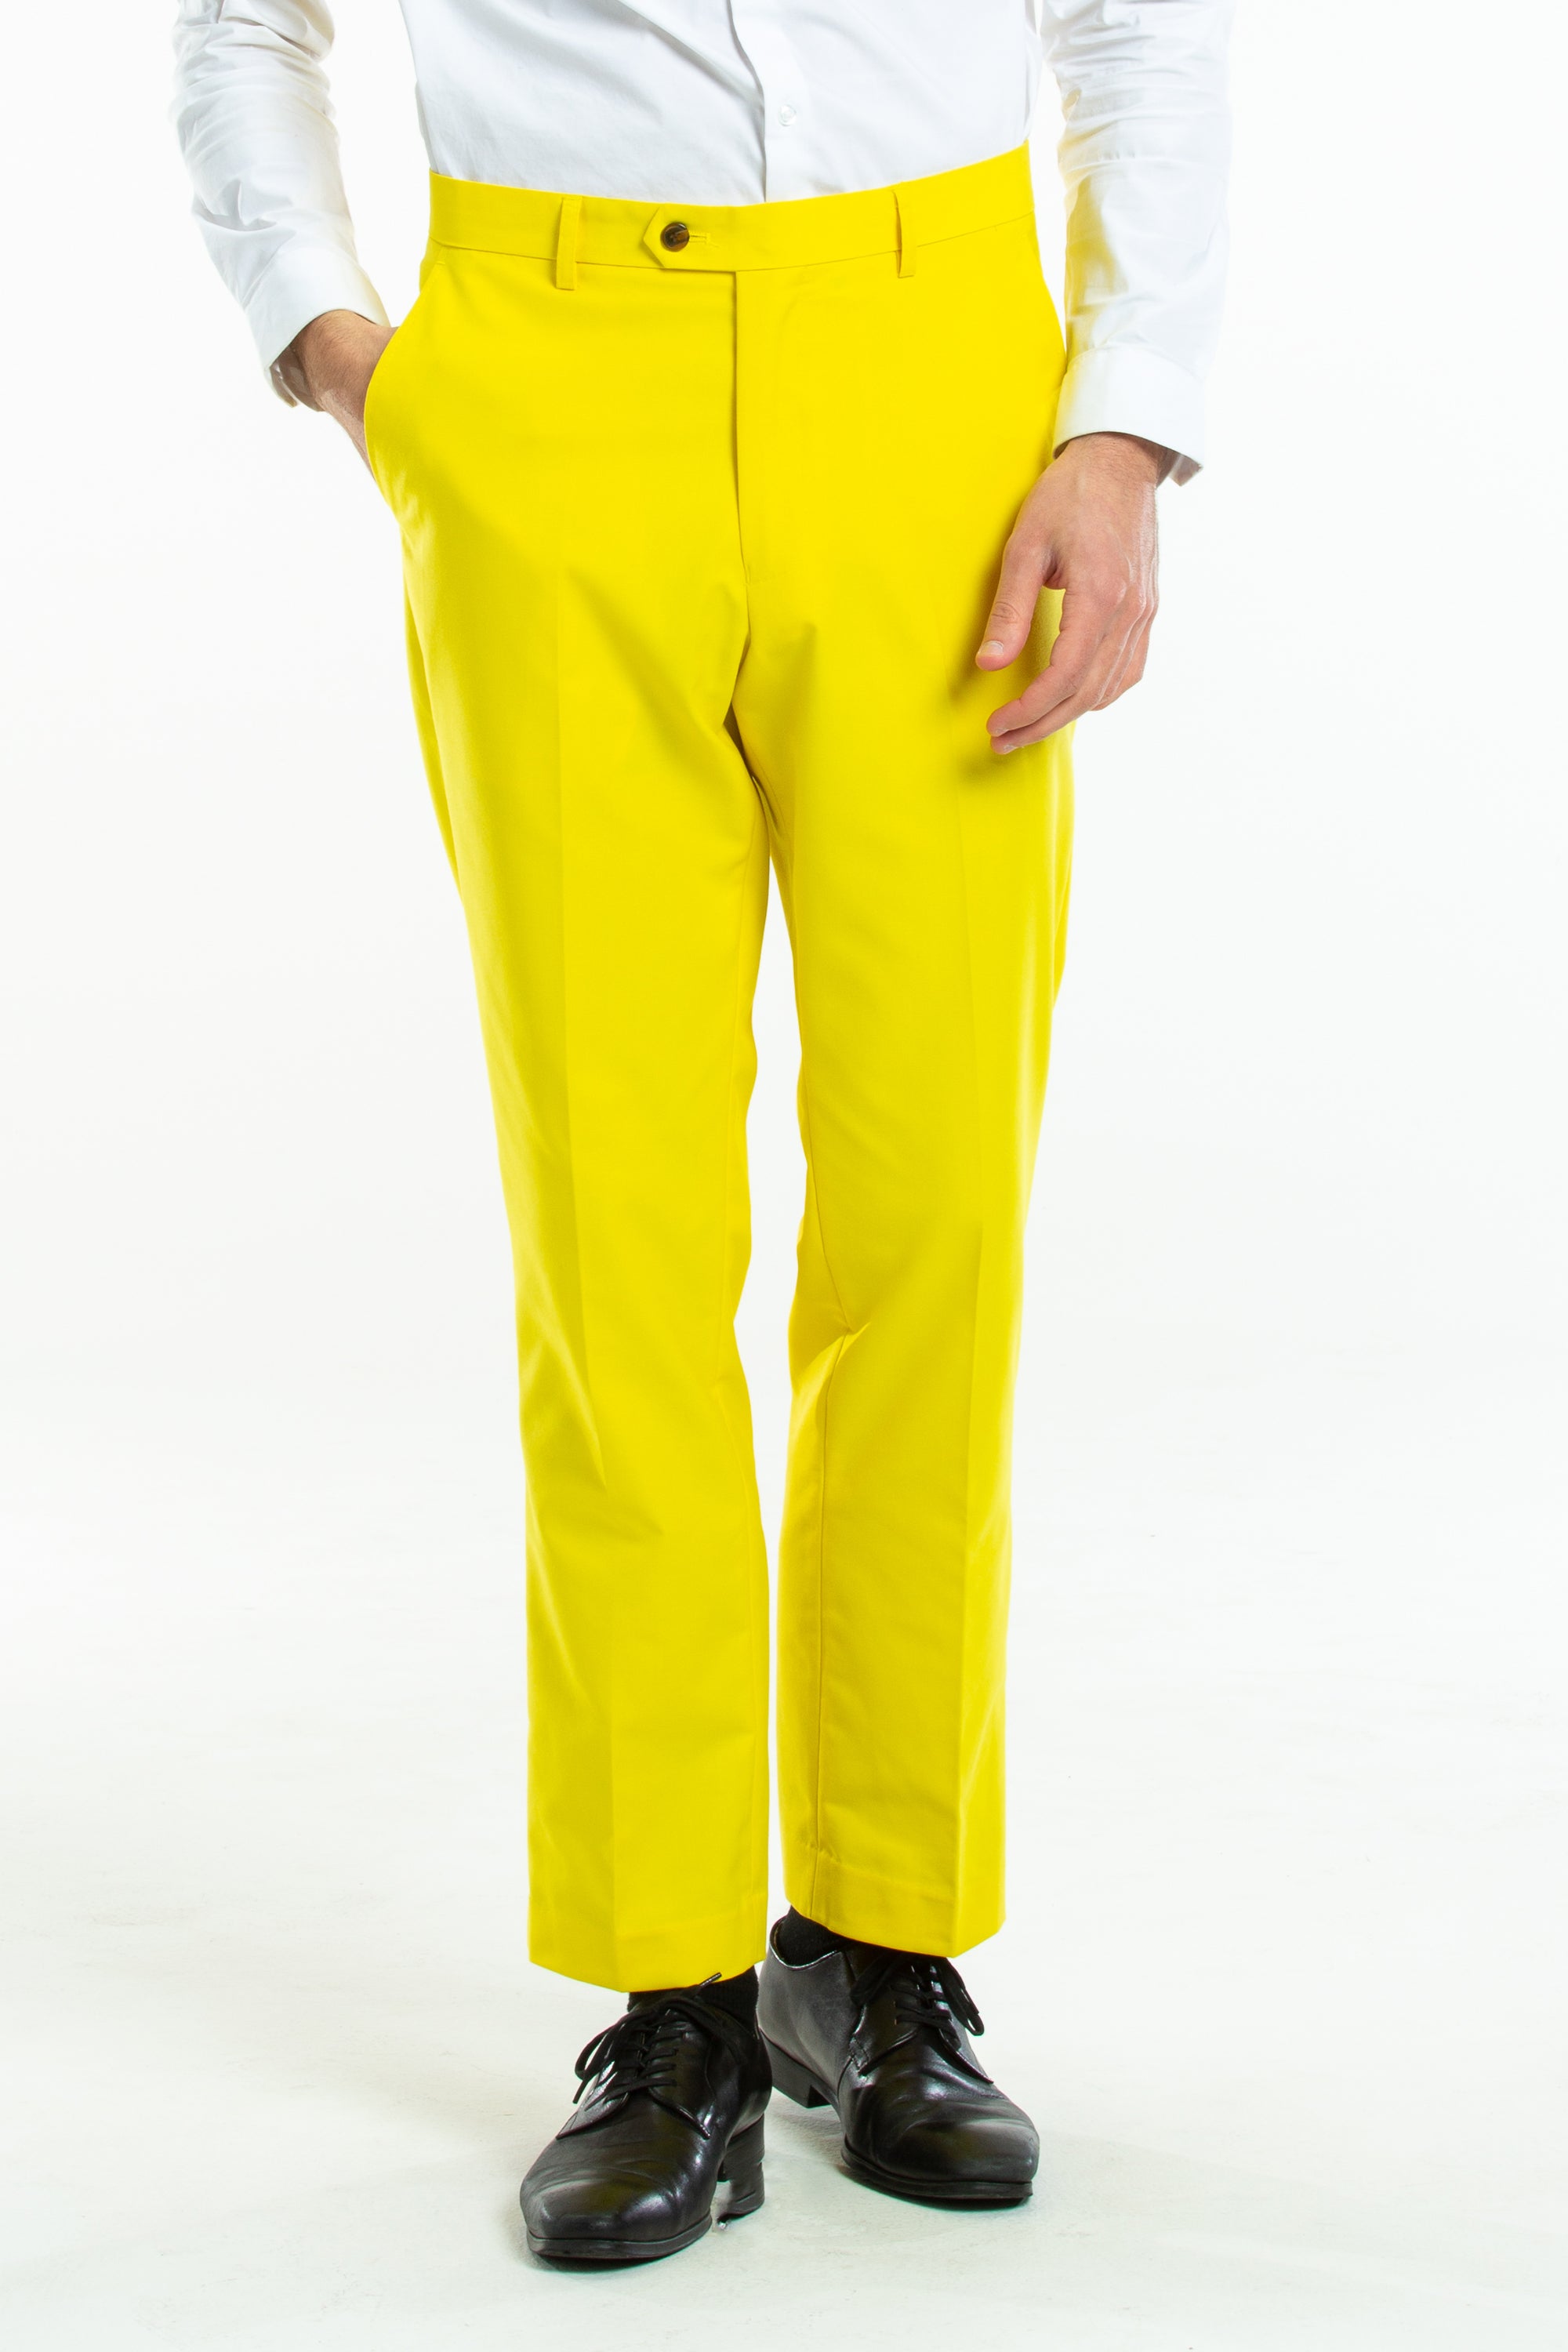 Yellow Linen Men's Suit Jacket Pants Wide Peak Lapel Wedding Groom Wear  Blazer | eBay